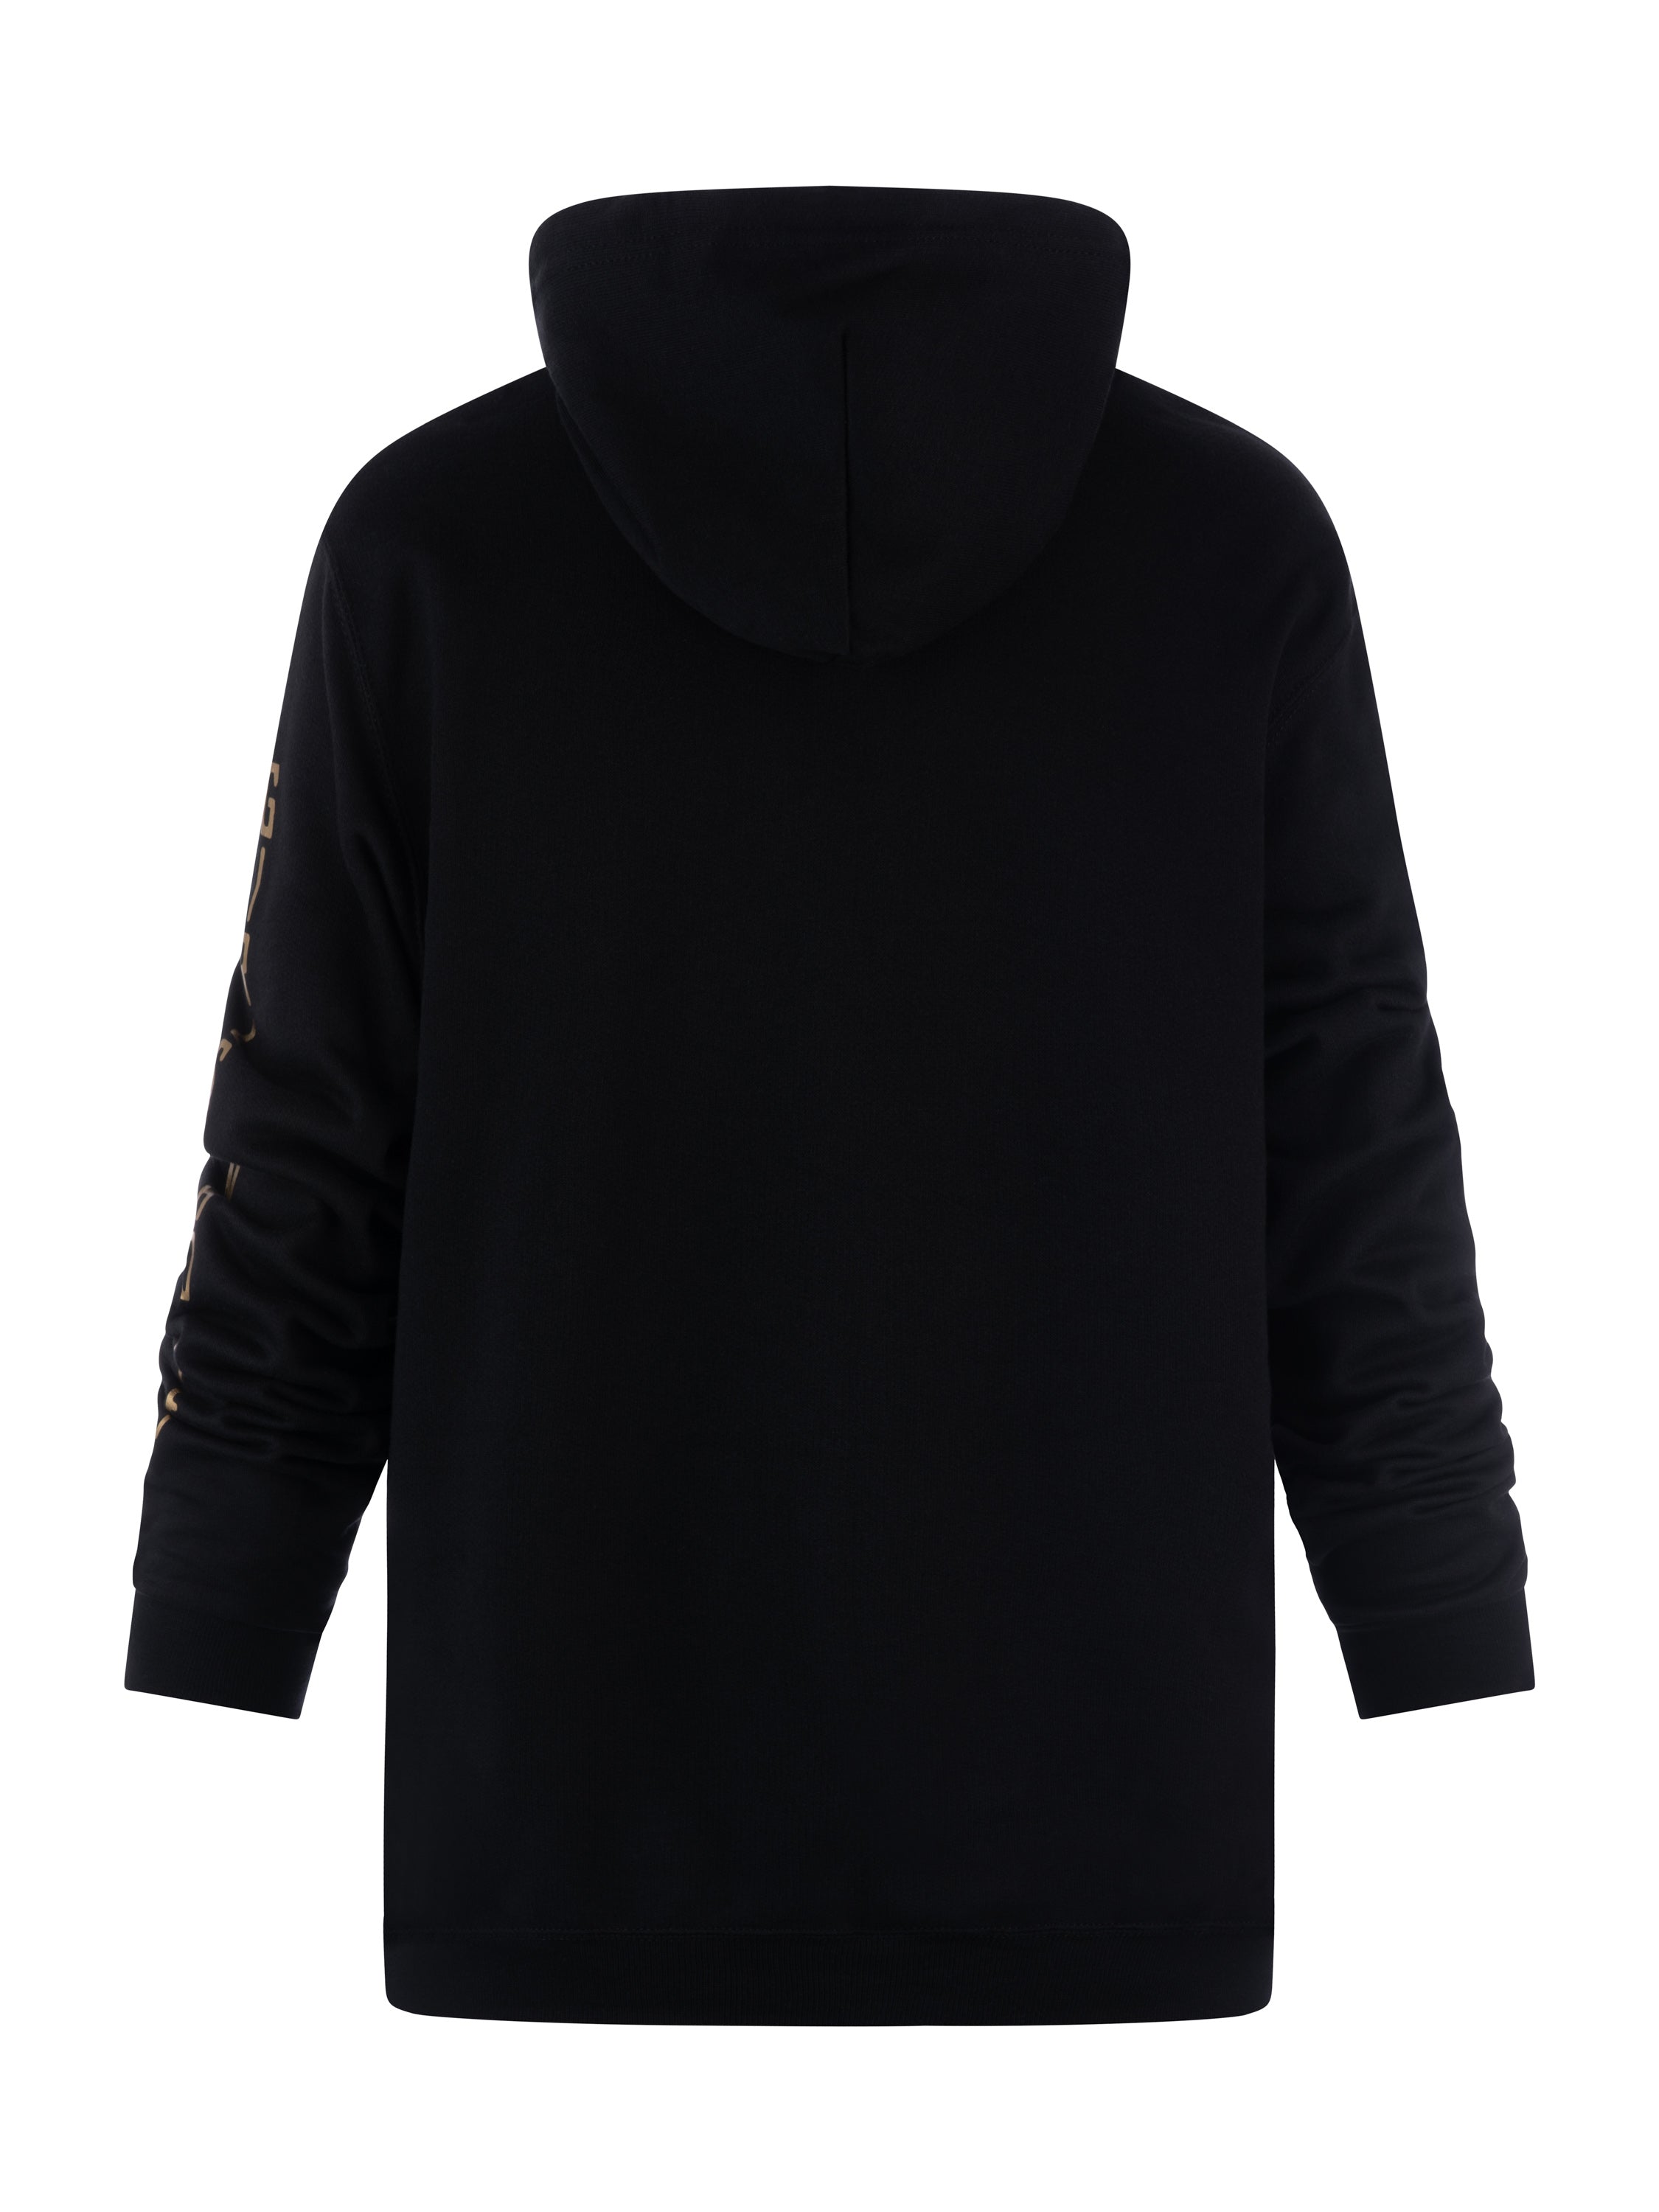 Girls Who Lift black hoodie reverse view